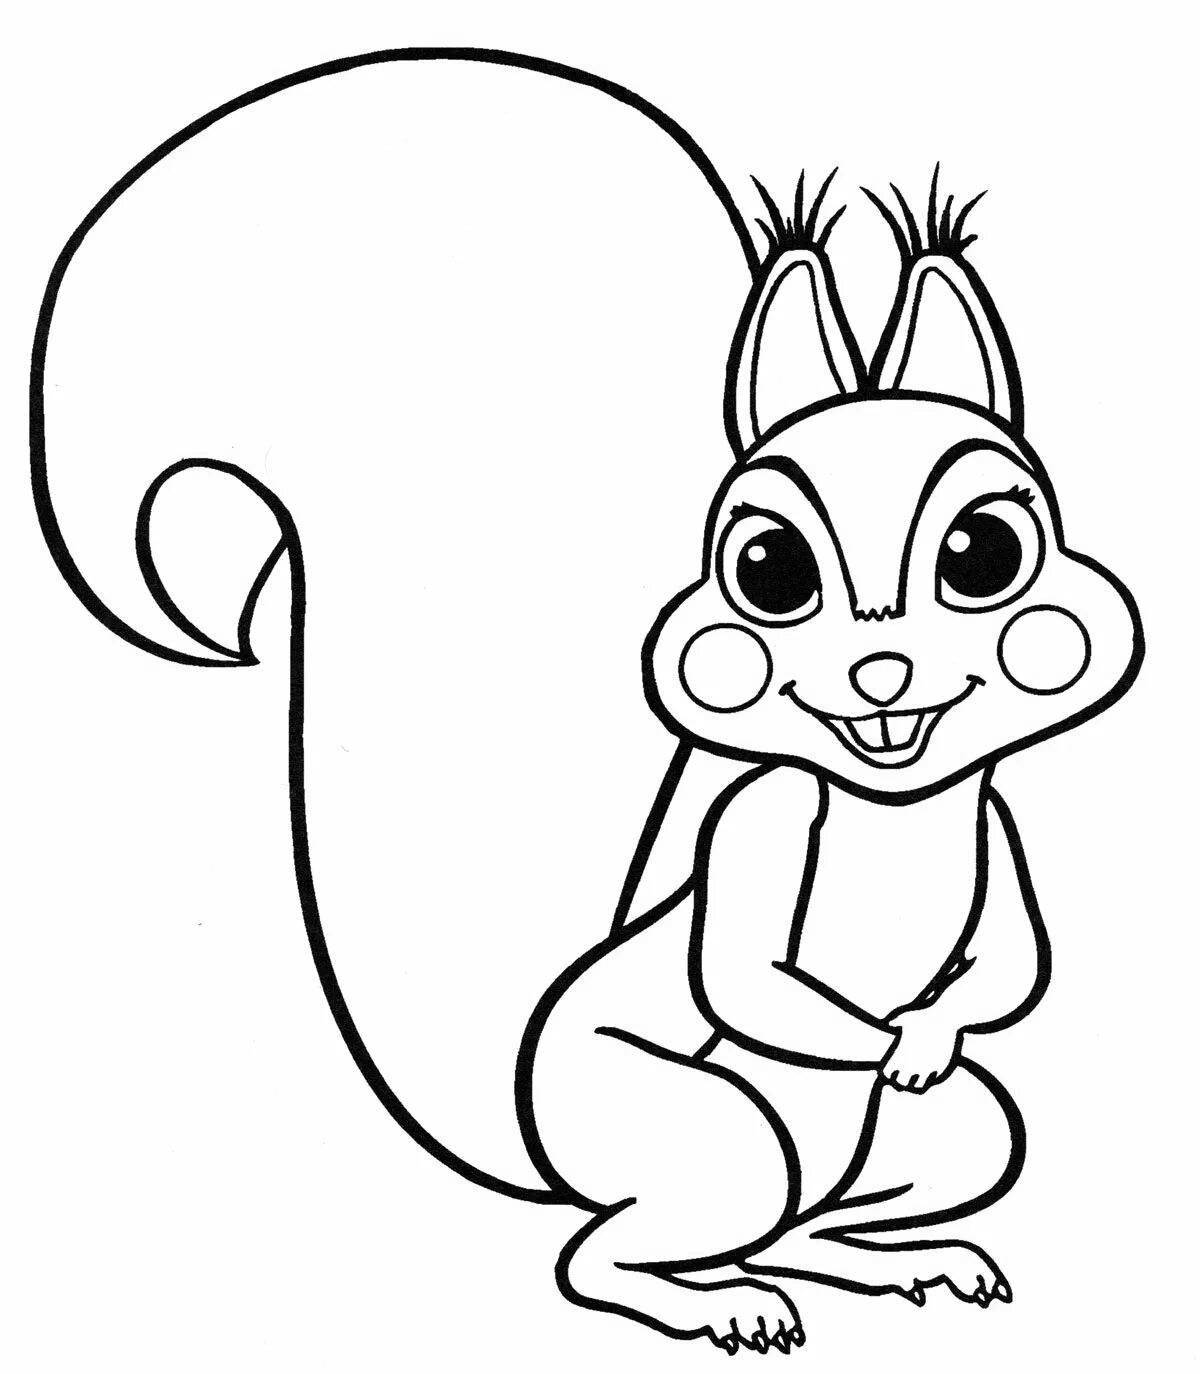 Naughty squirrel coloring book